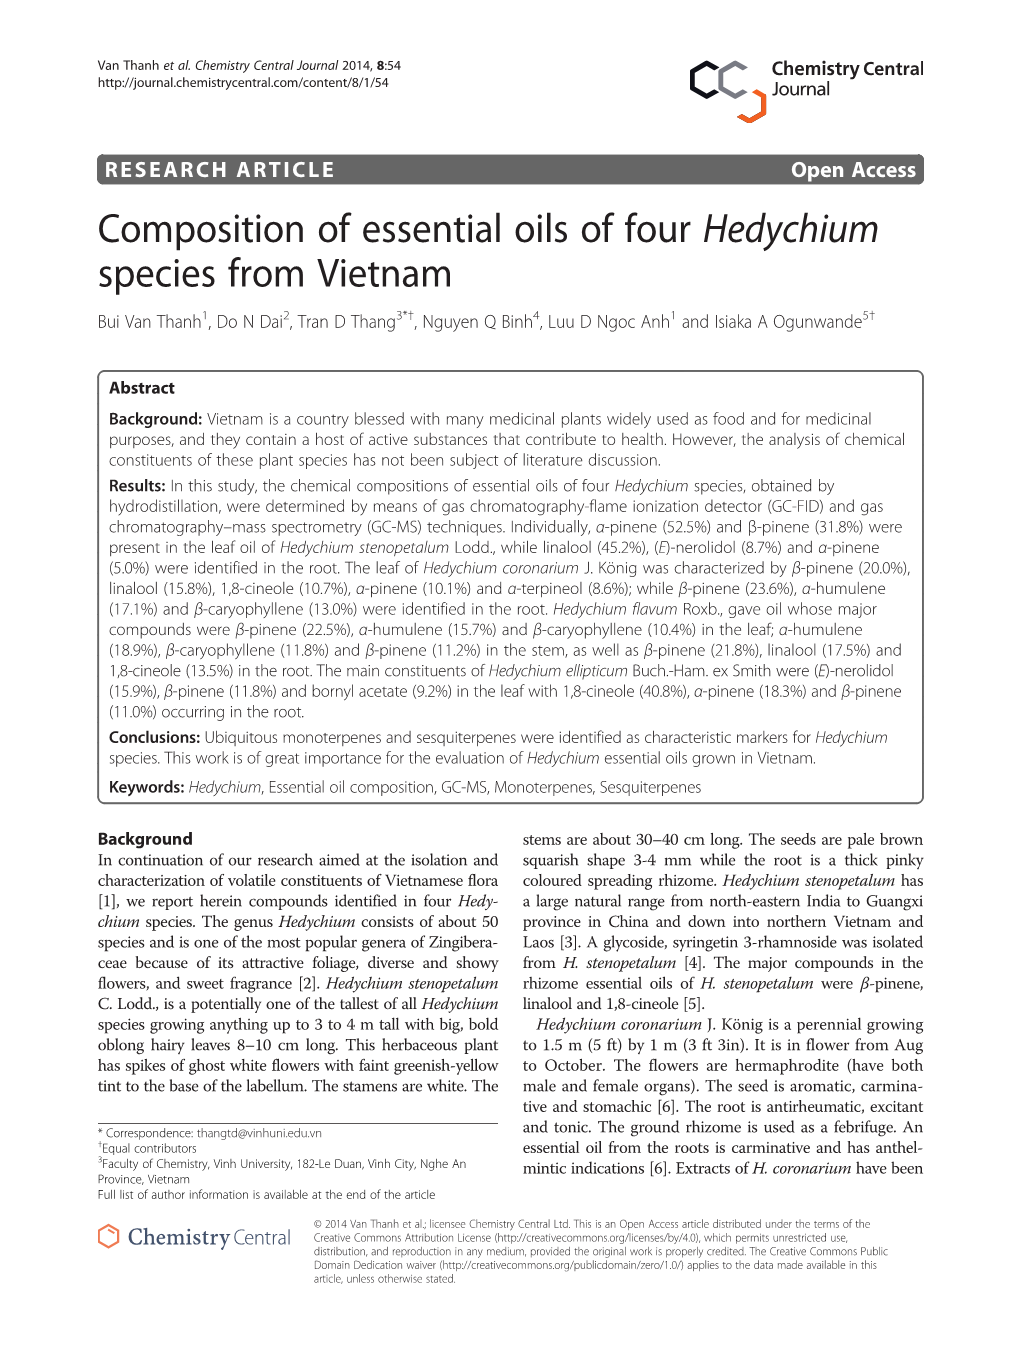 Composition of Essential Oils of Four Hedychium Species